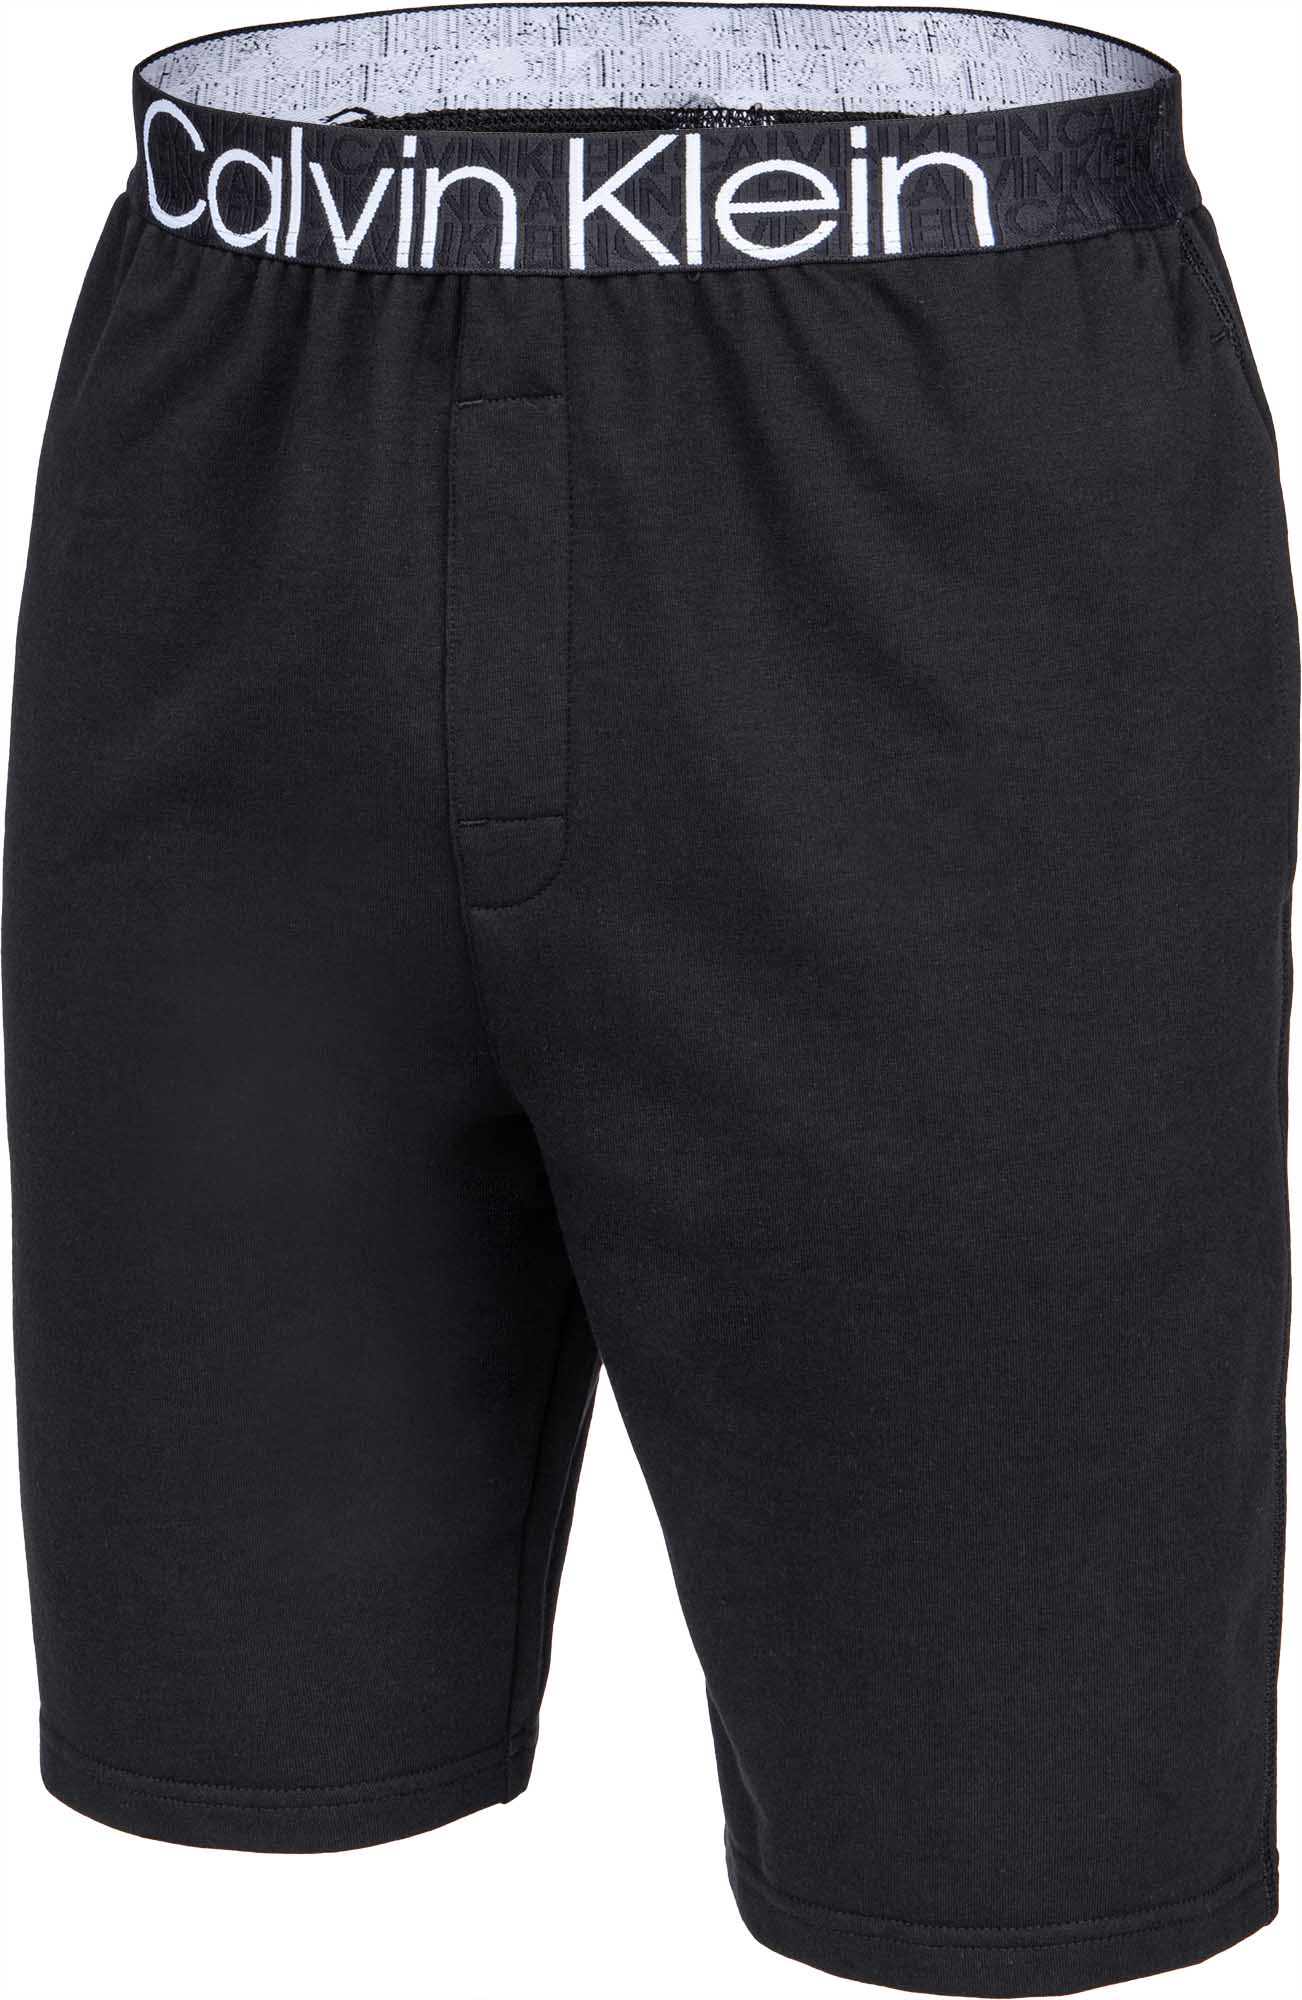 Men's sleeping shorts